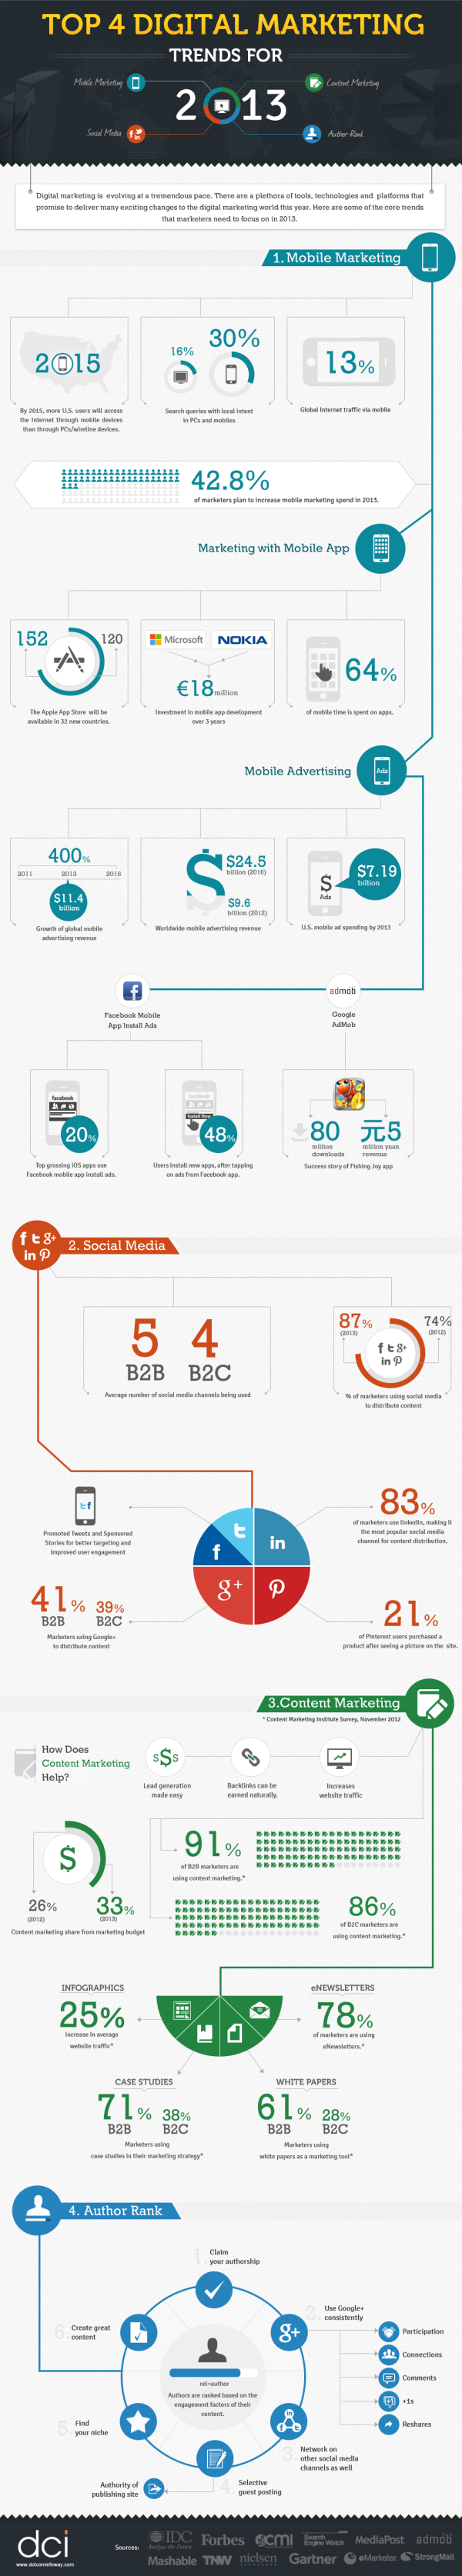 Digital Marketing Trends for 2013 resized 600